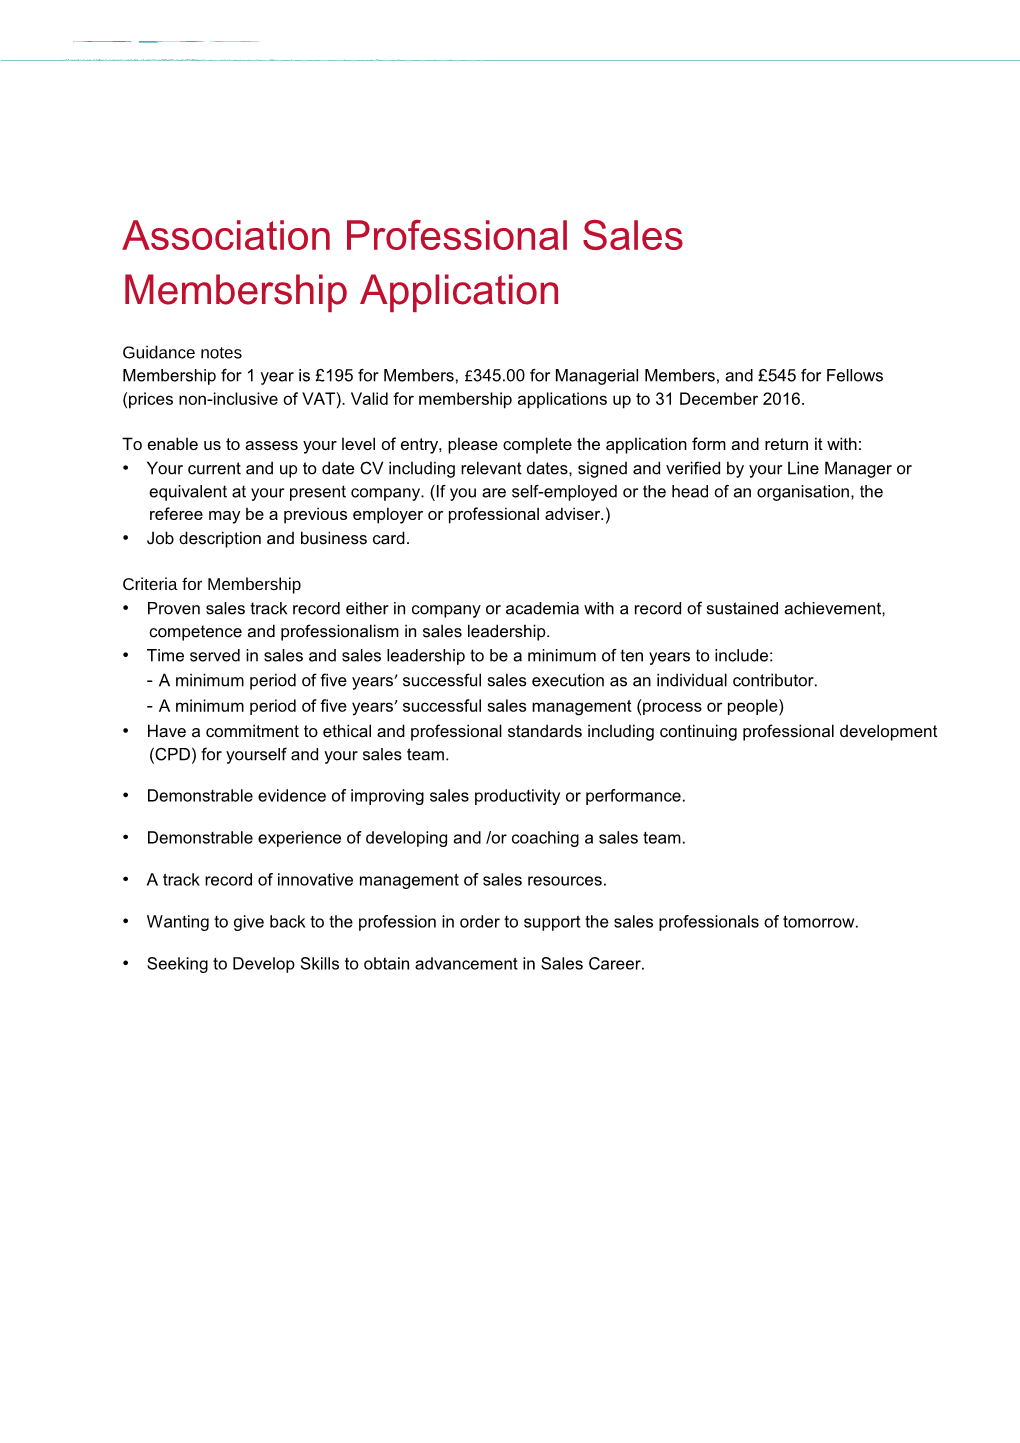 Association Professional Sales Membership Application Form